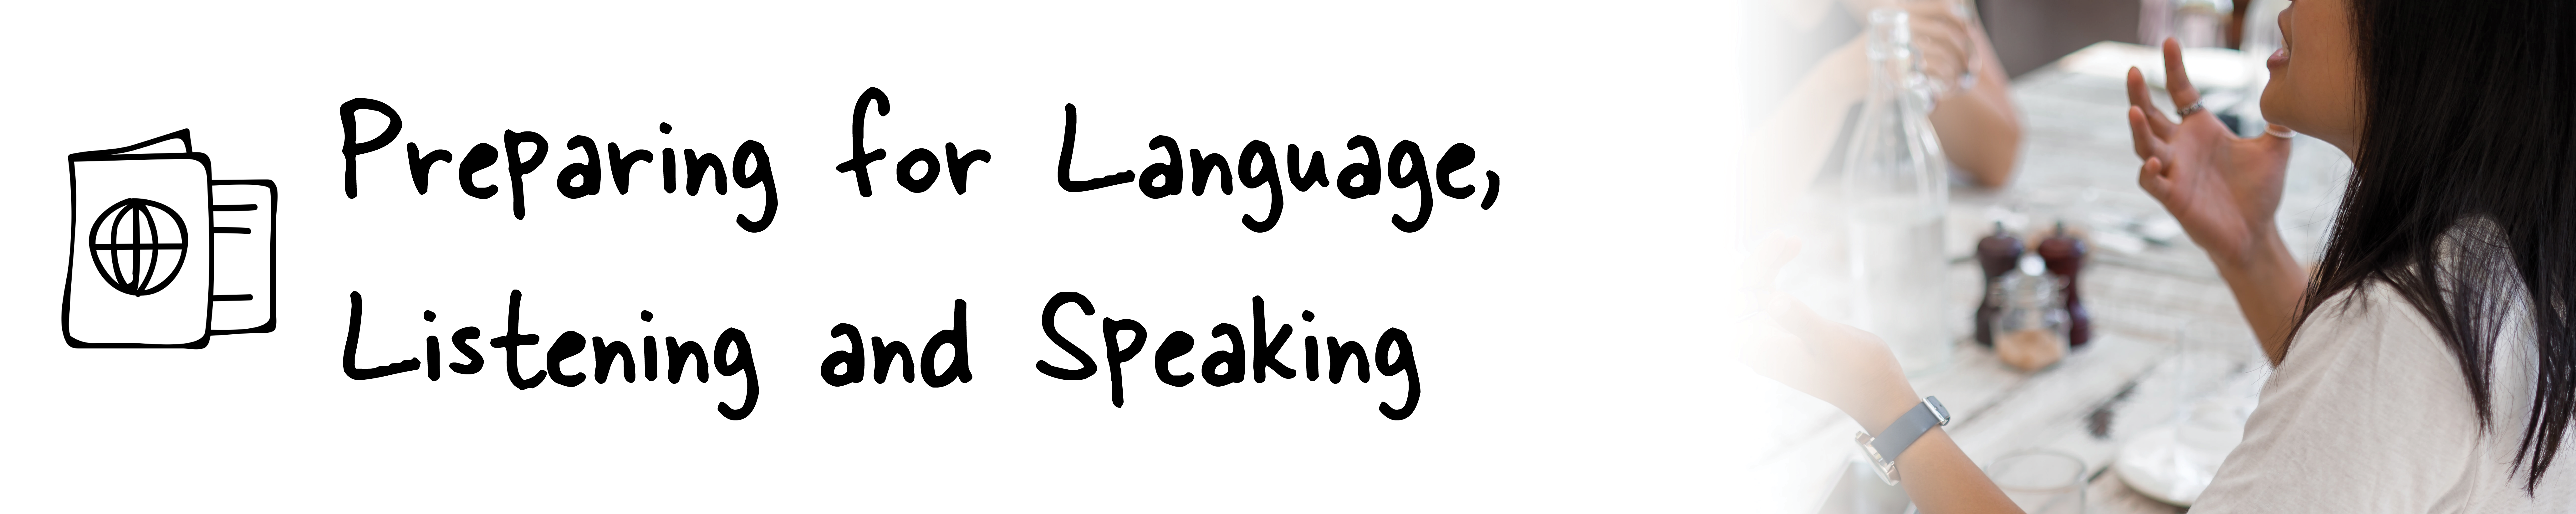 Preparing for Language, Listening and Speaking